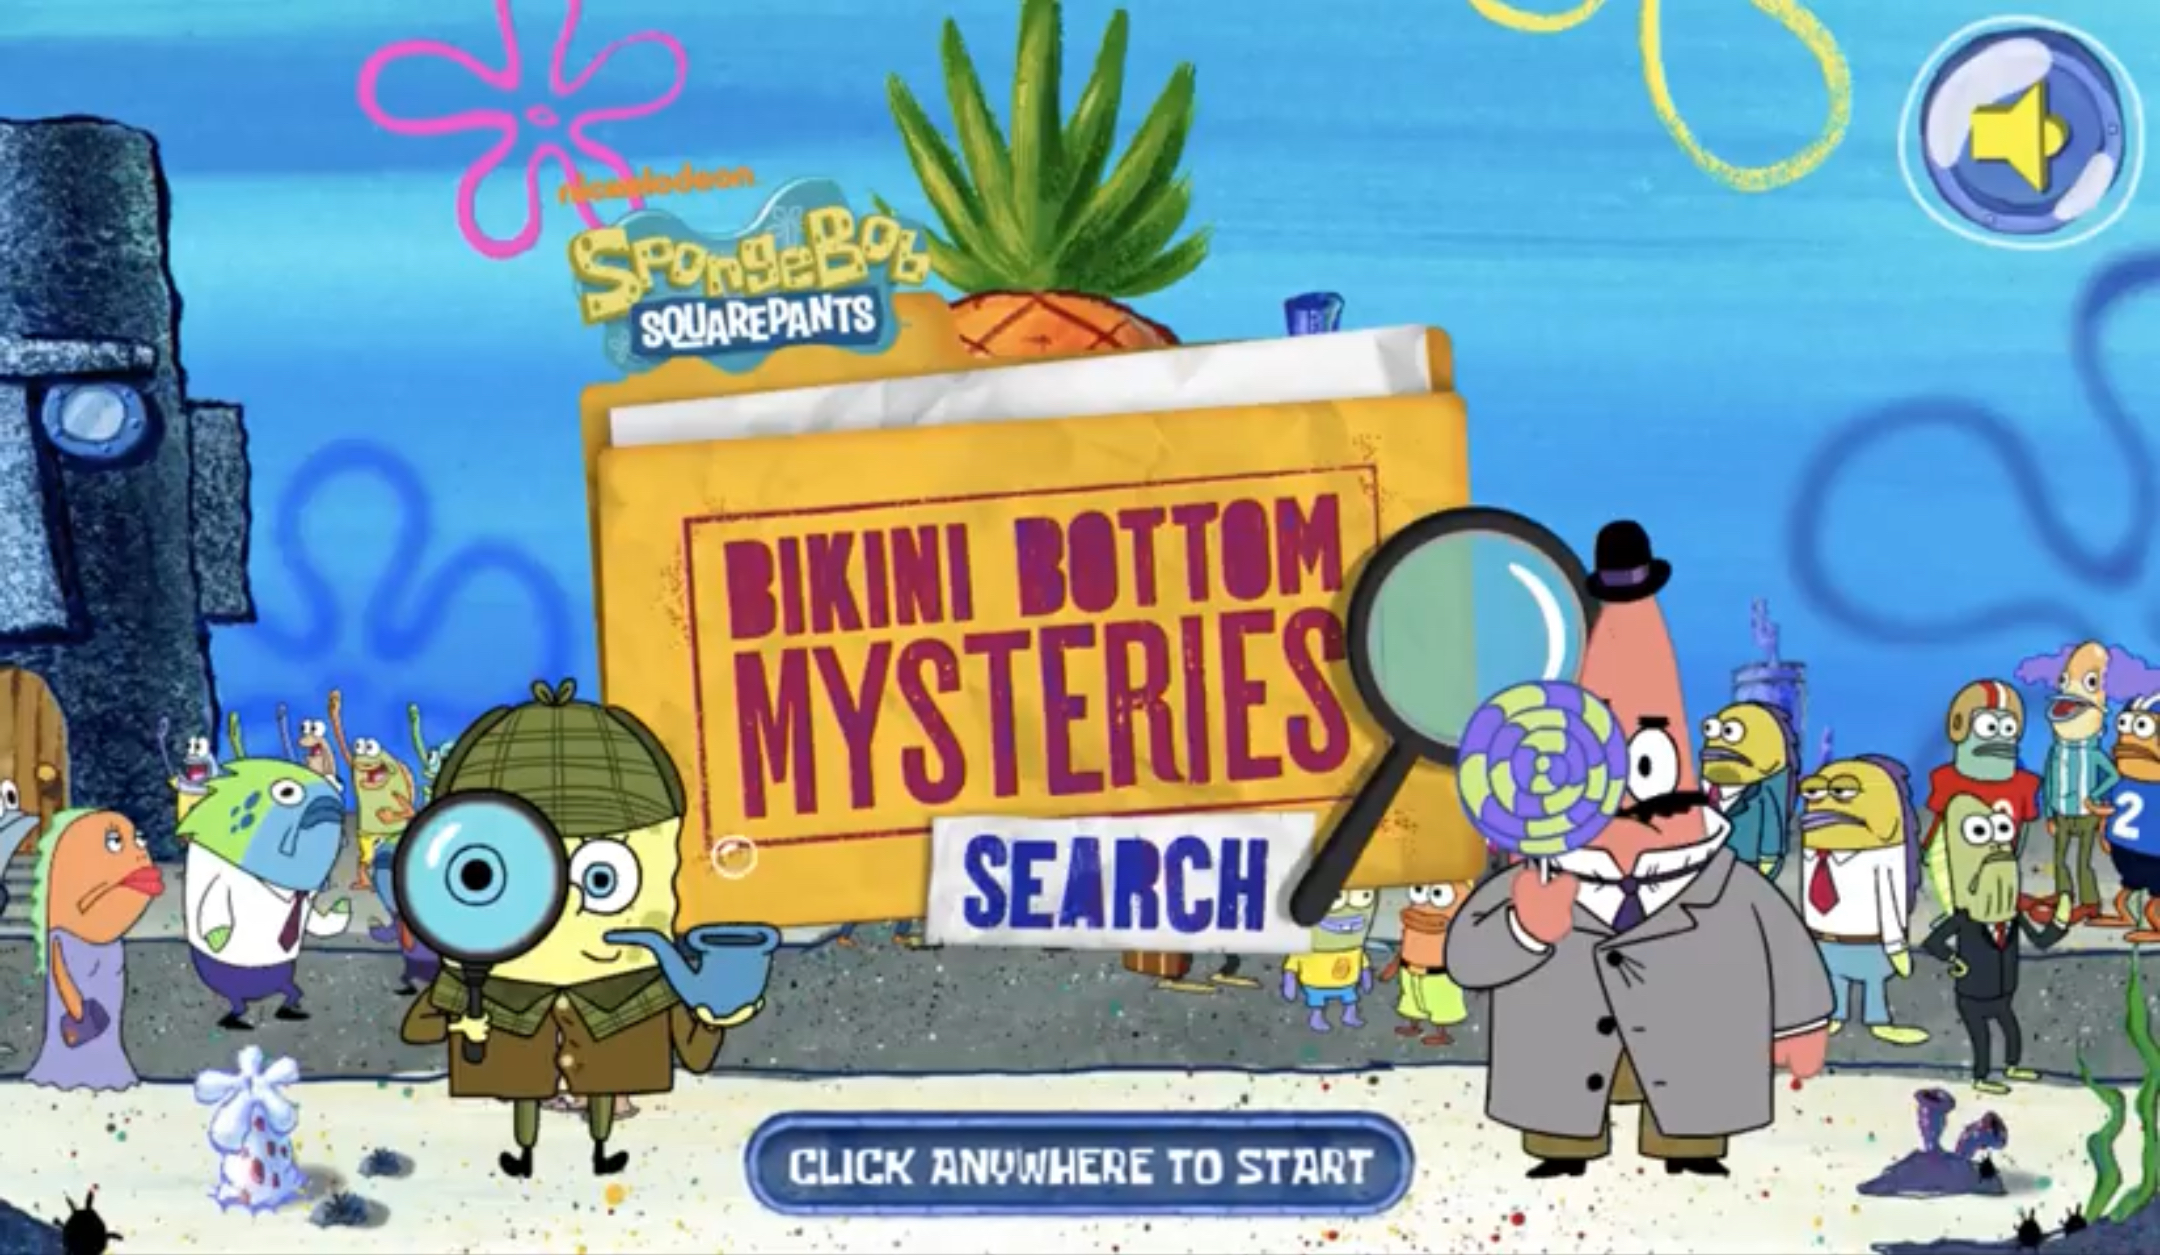 Bikini Bottom Mysteries Search, Encyclopedia SpongeBobia